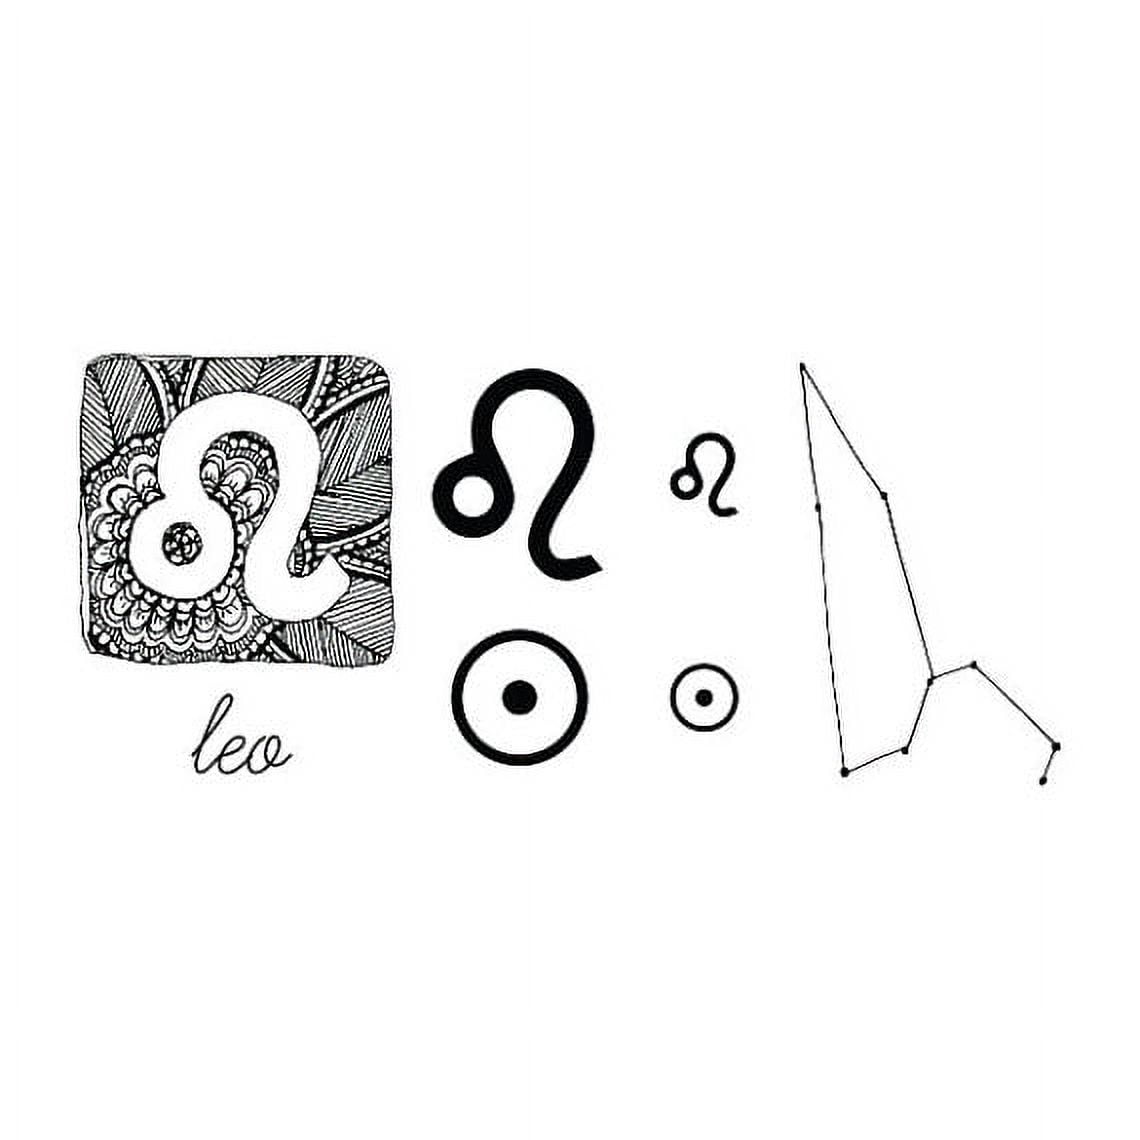 Leo Zodiac Symbol Tattoo on Wrist